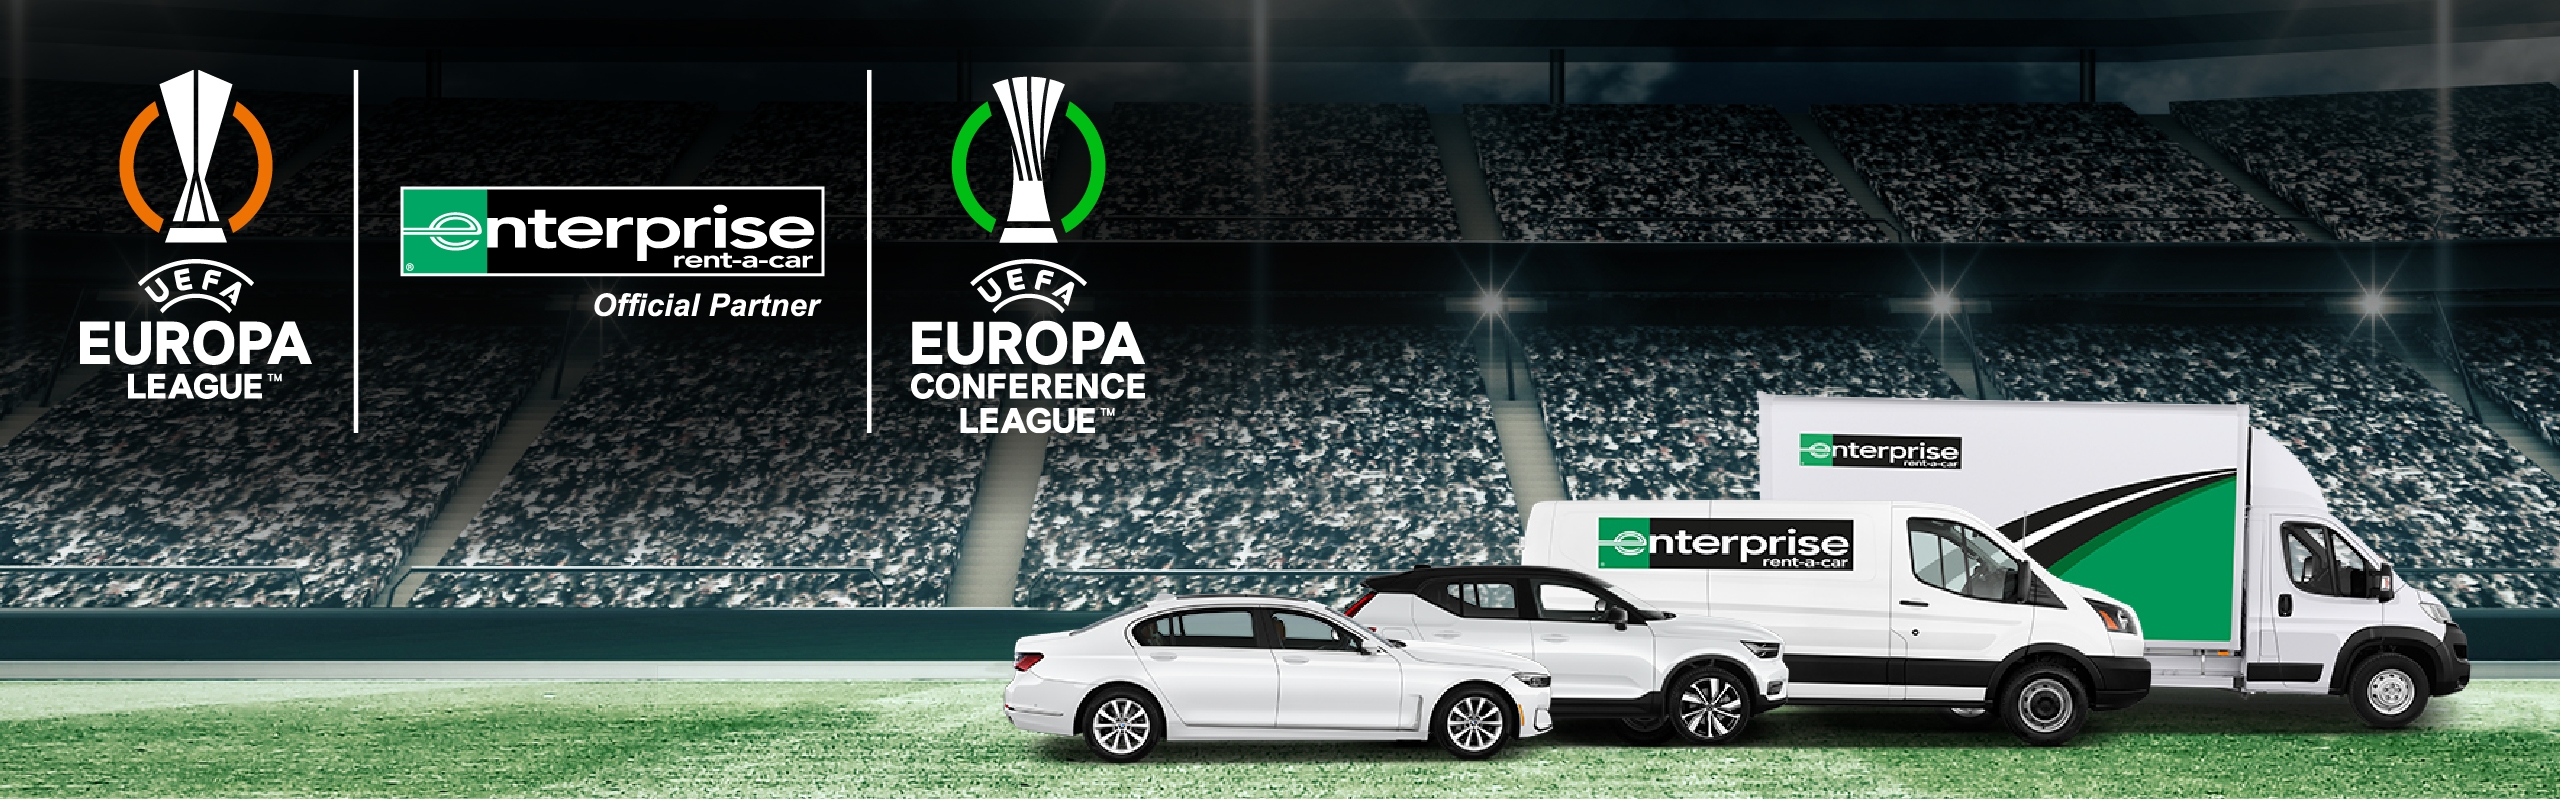  UEFA Europa League & UEFA Europa Conference League Sponsorship